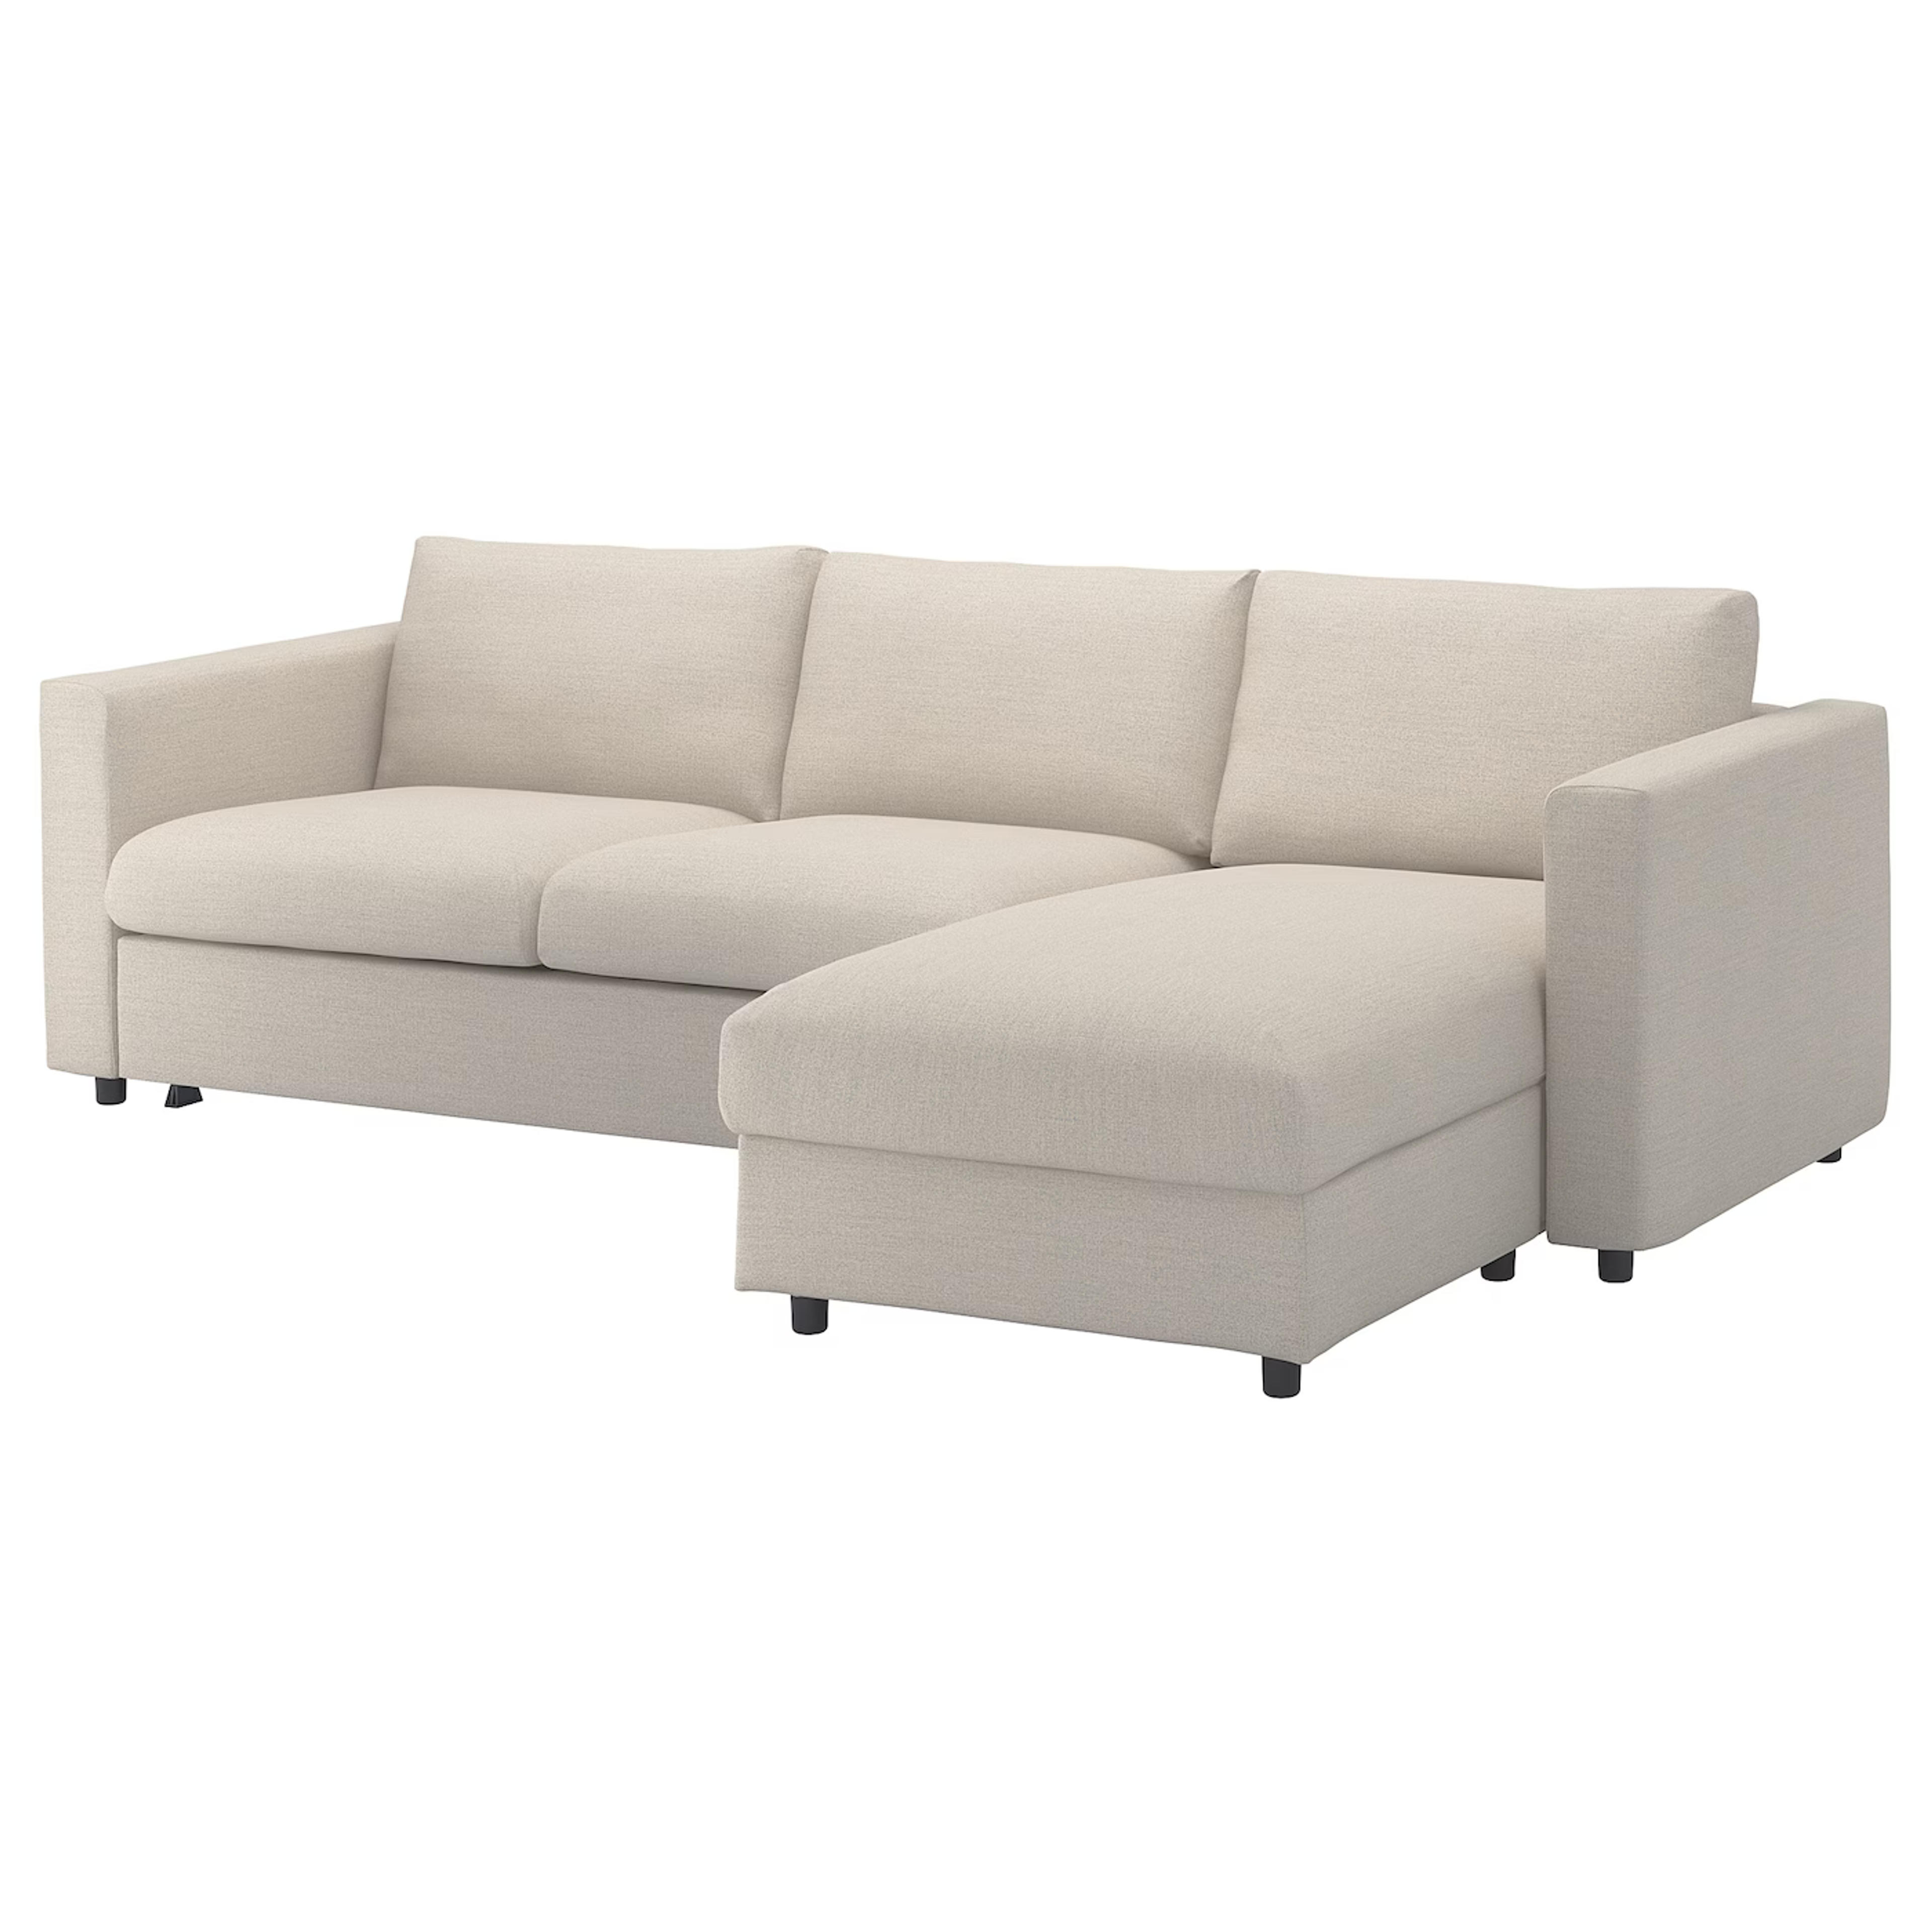 FINNALA Sleeper sofa, With chaise/Gunnared beige